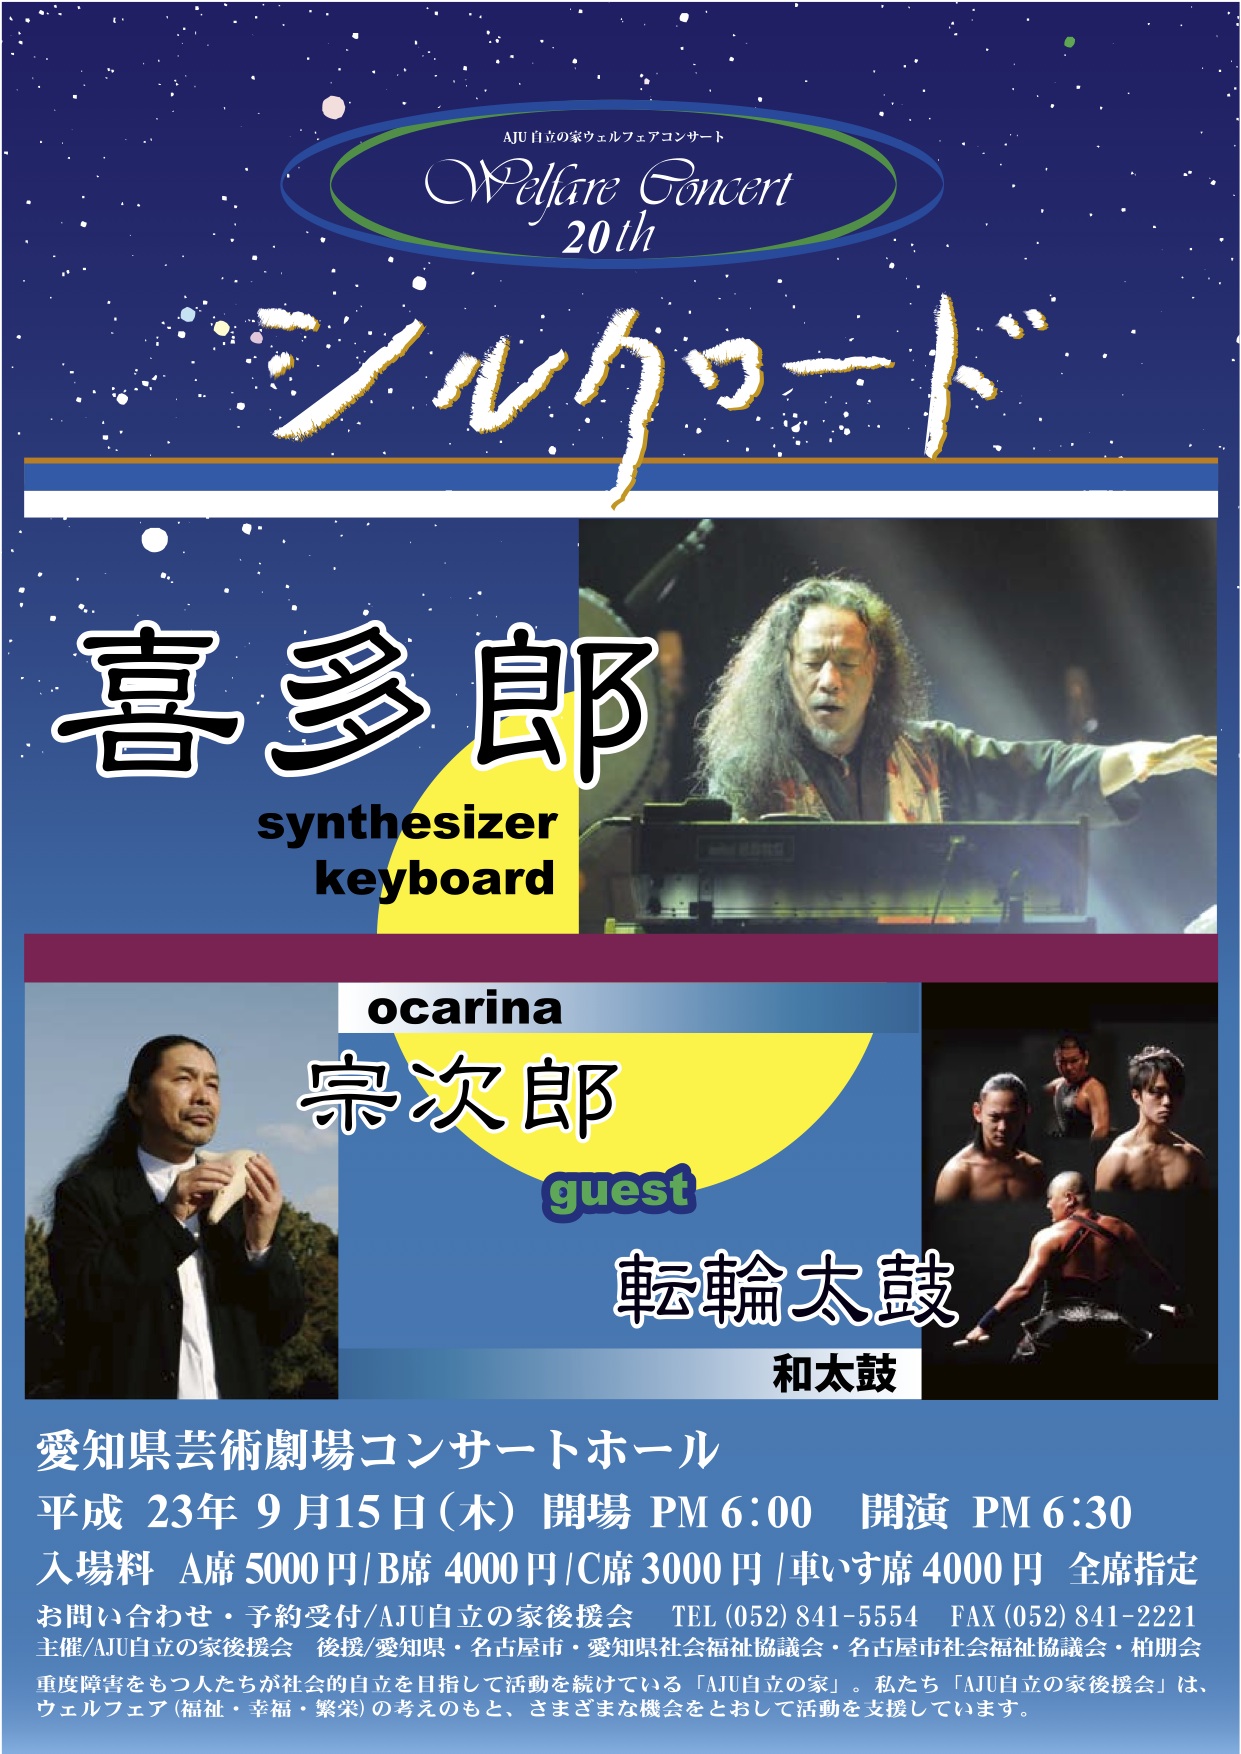 AJU 20th Kitaro Anniversary Welfare Concert